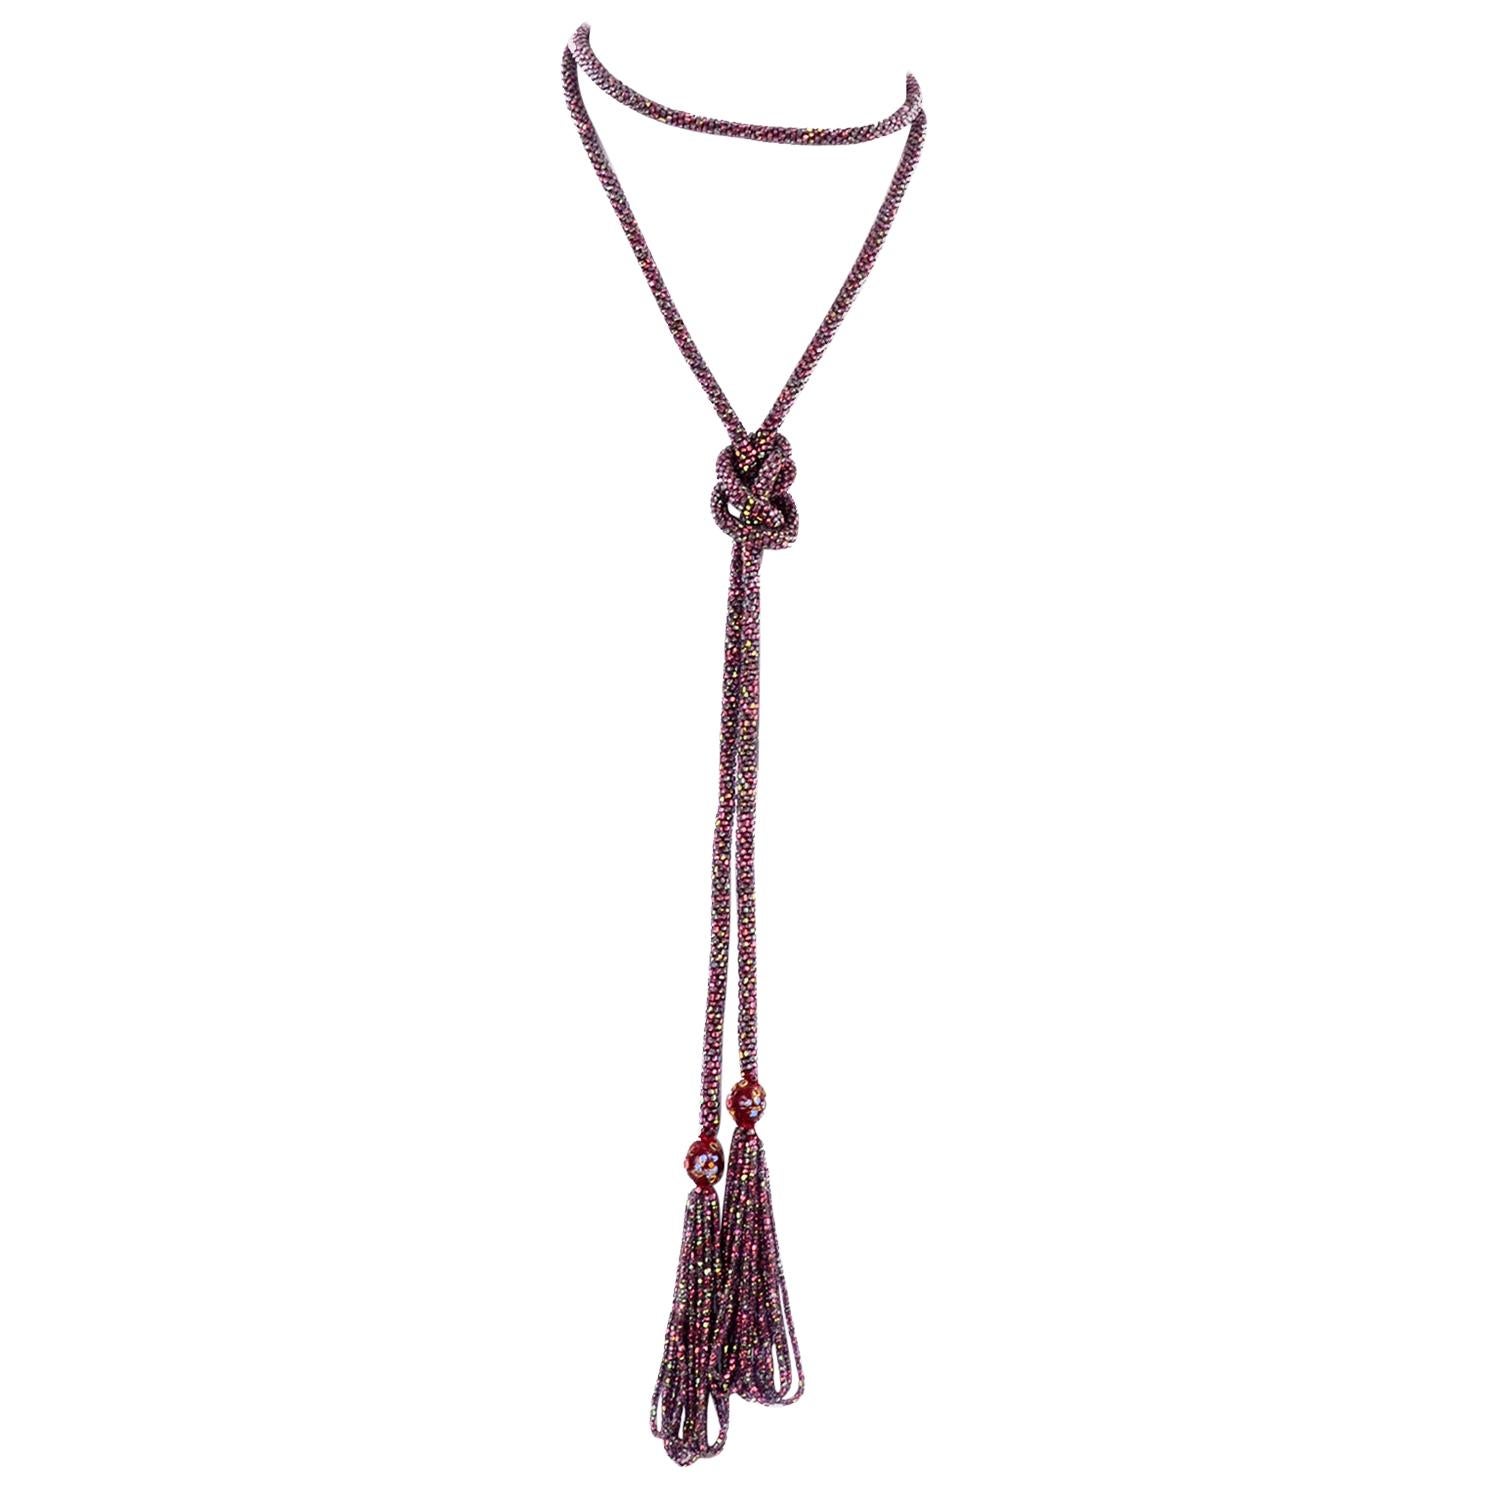 Vintage 1920s Sautoir Beaded Tassel Flapper Necklace W Lampwork Beads & Fringe